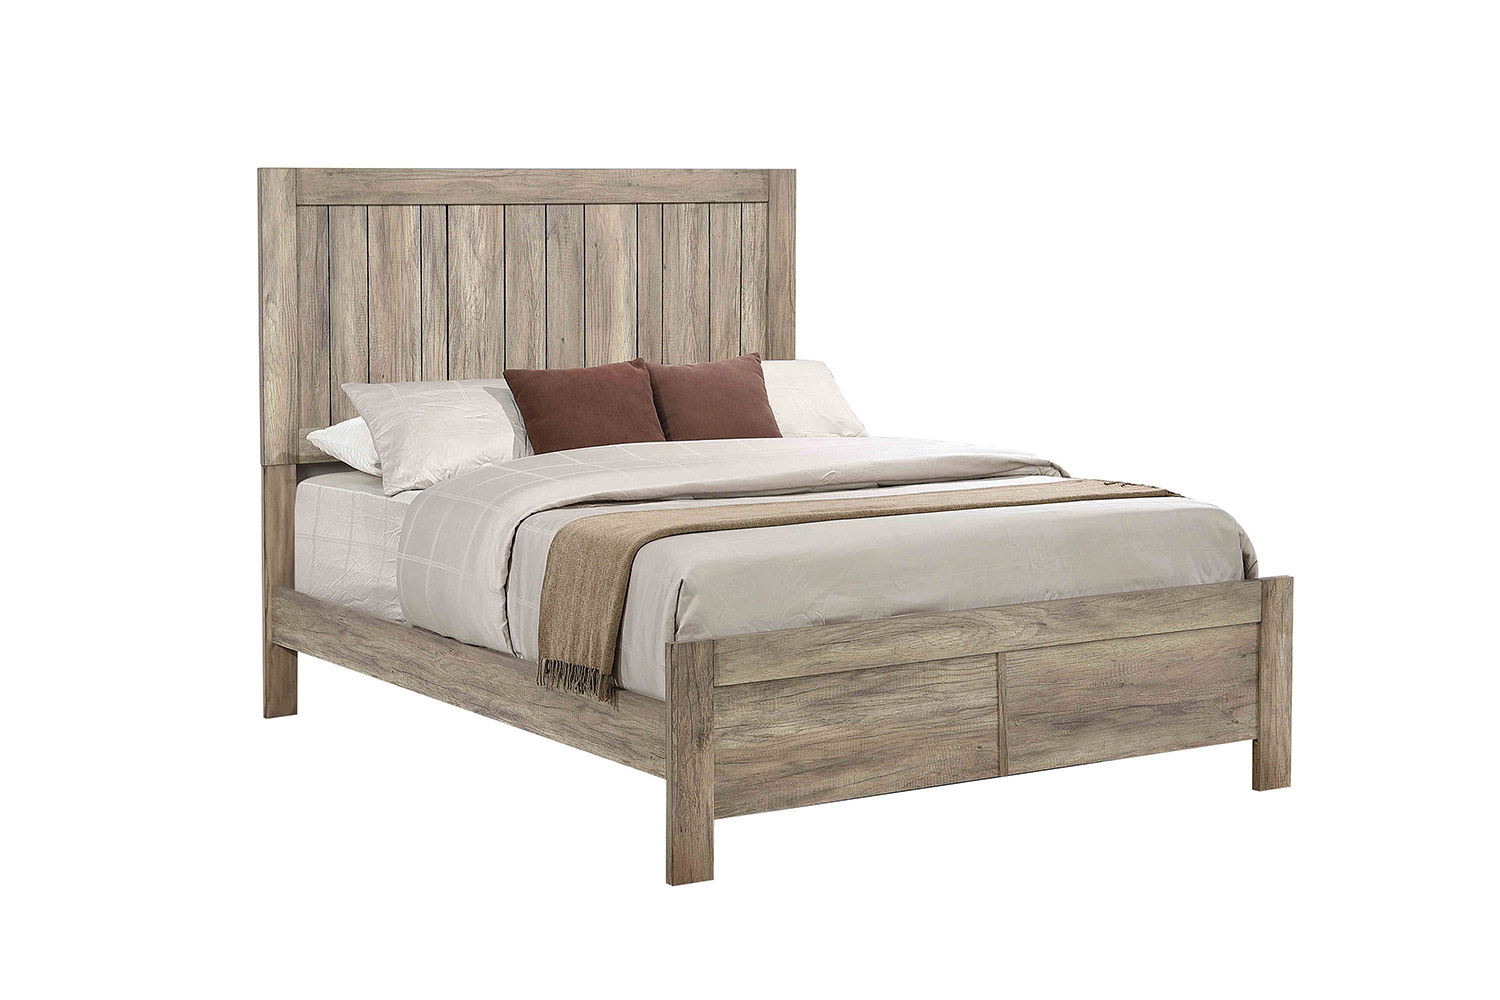 Coaster Adelaide Bed - Rustic Oak